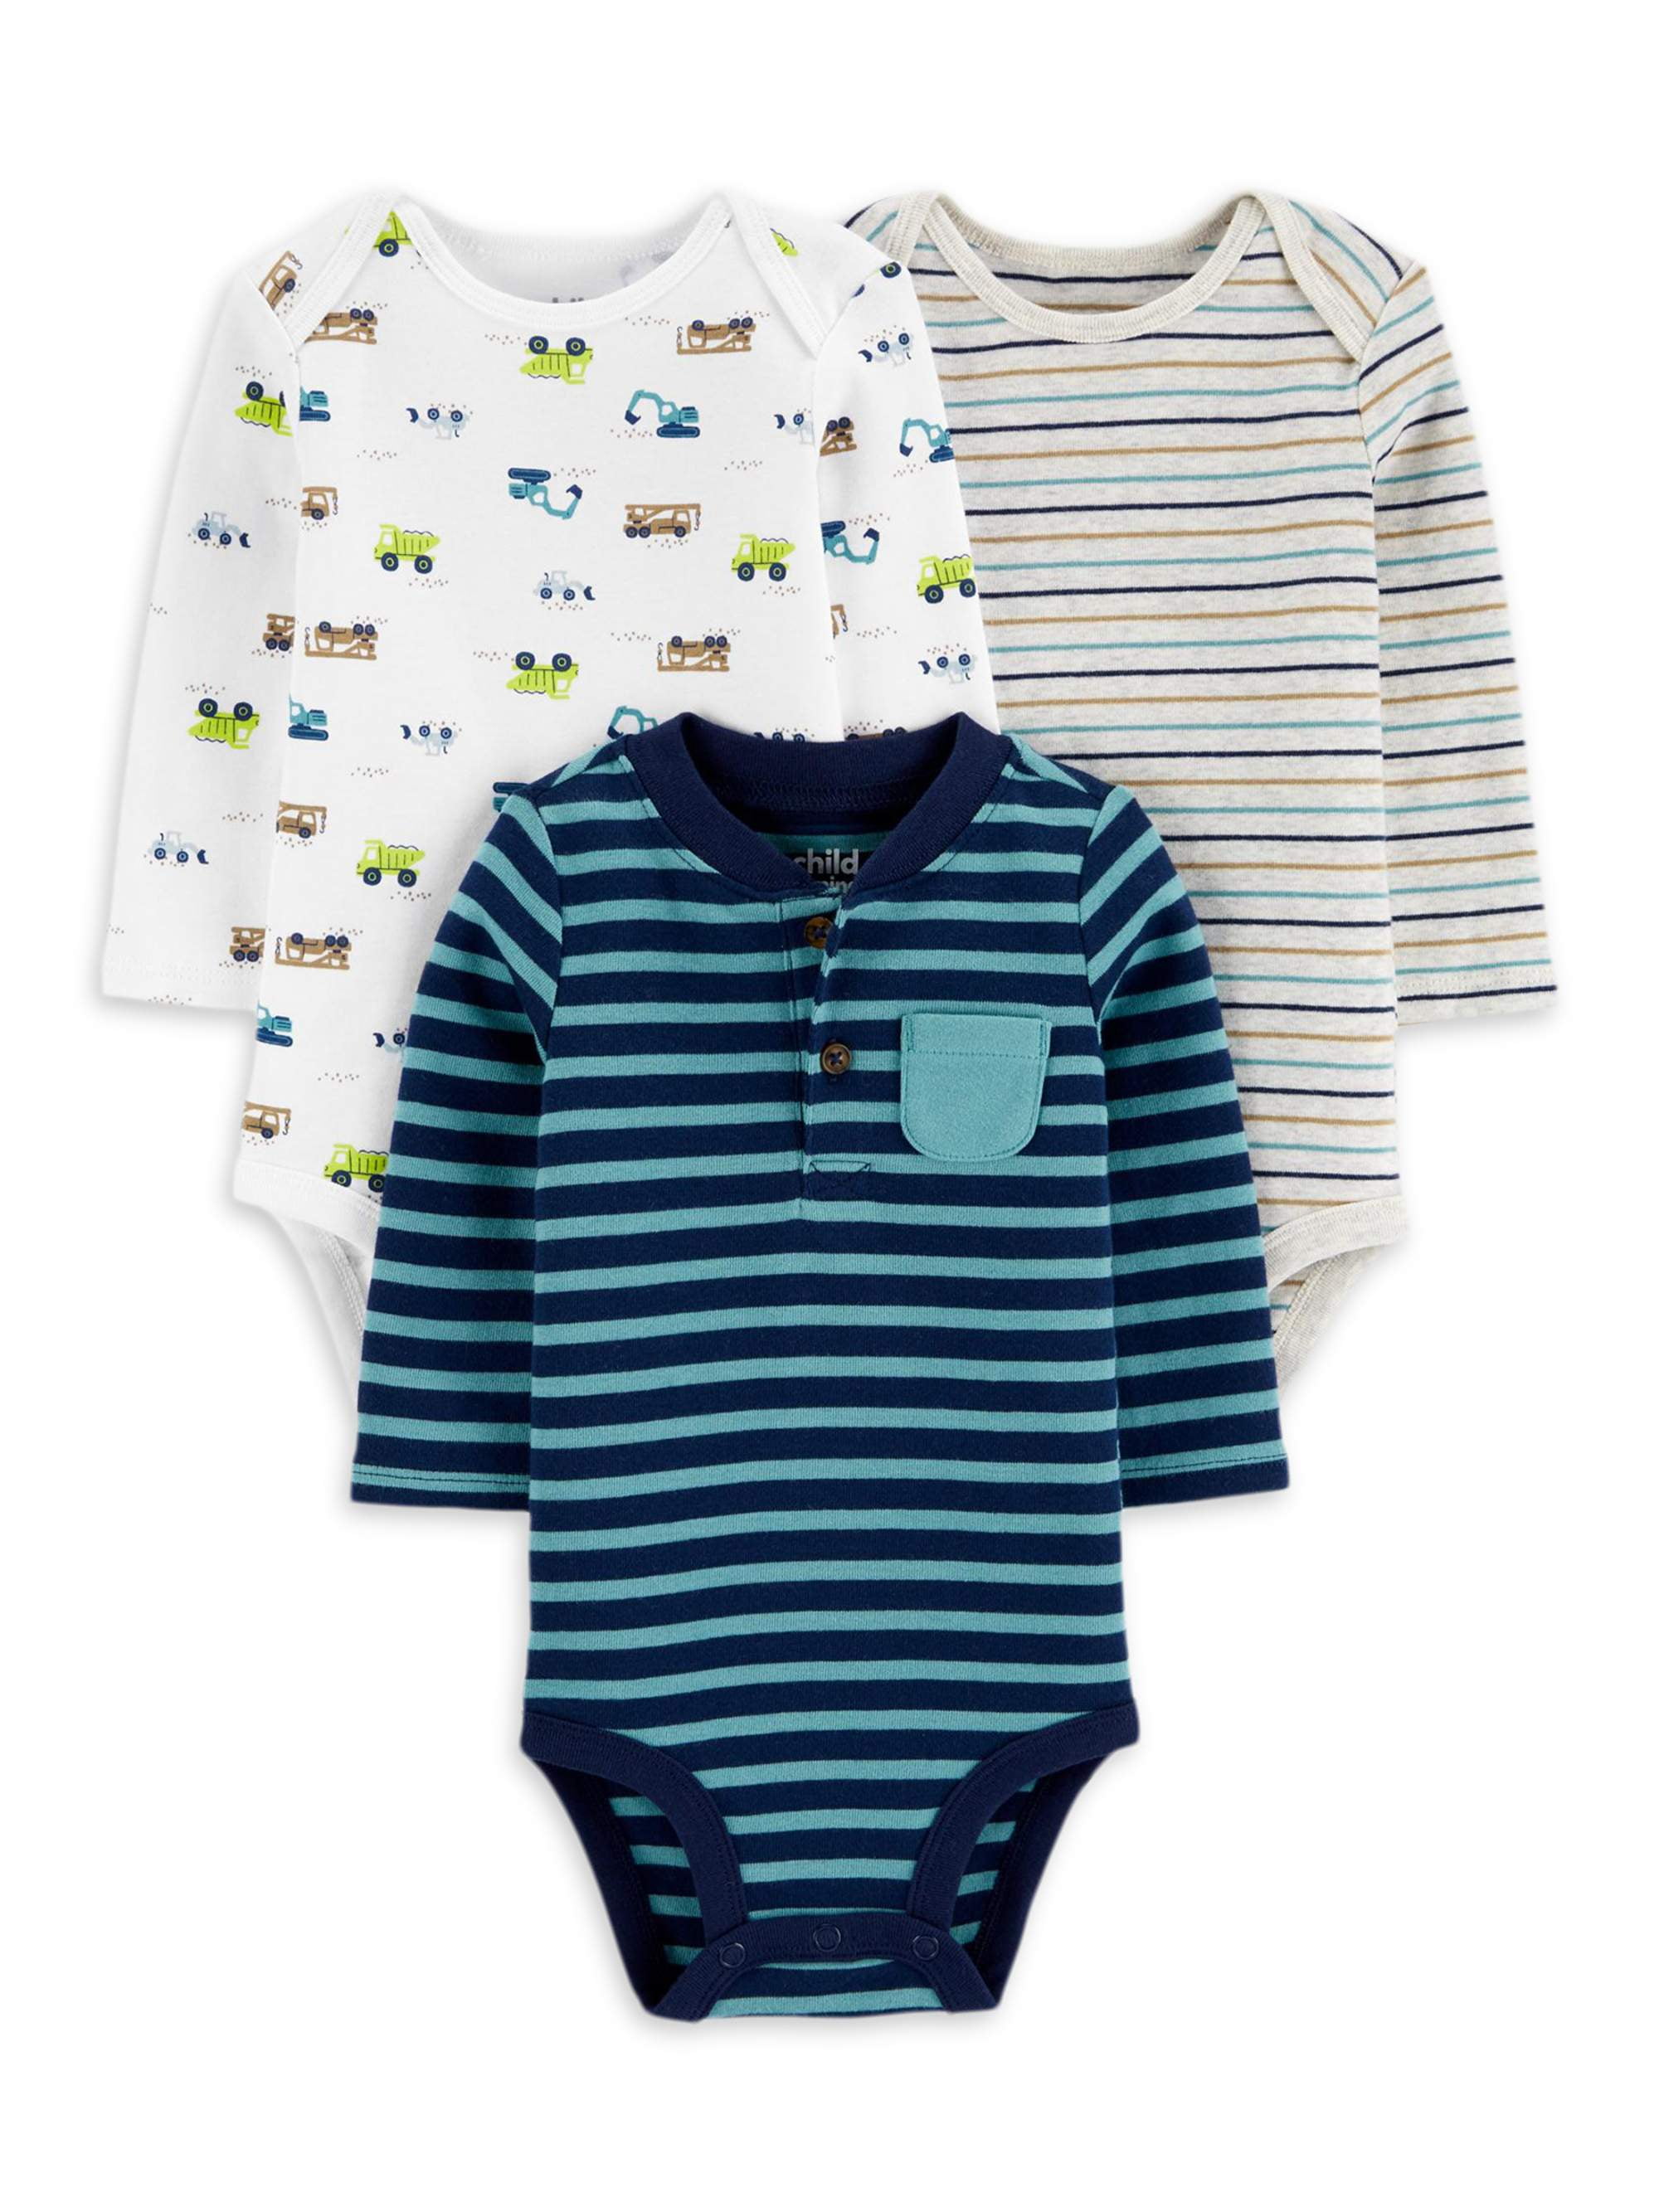 Carter's Child of Mine Baby Boy Bodysuits, 3-Pack, Sizes Preemie